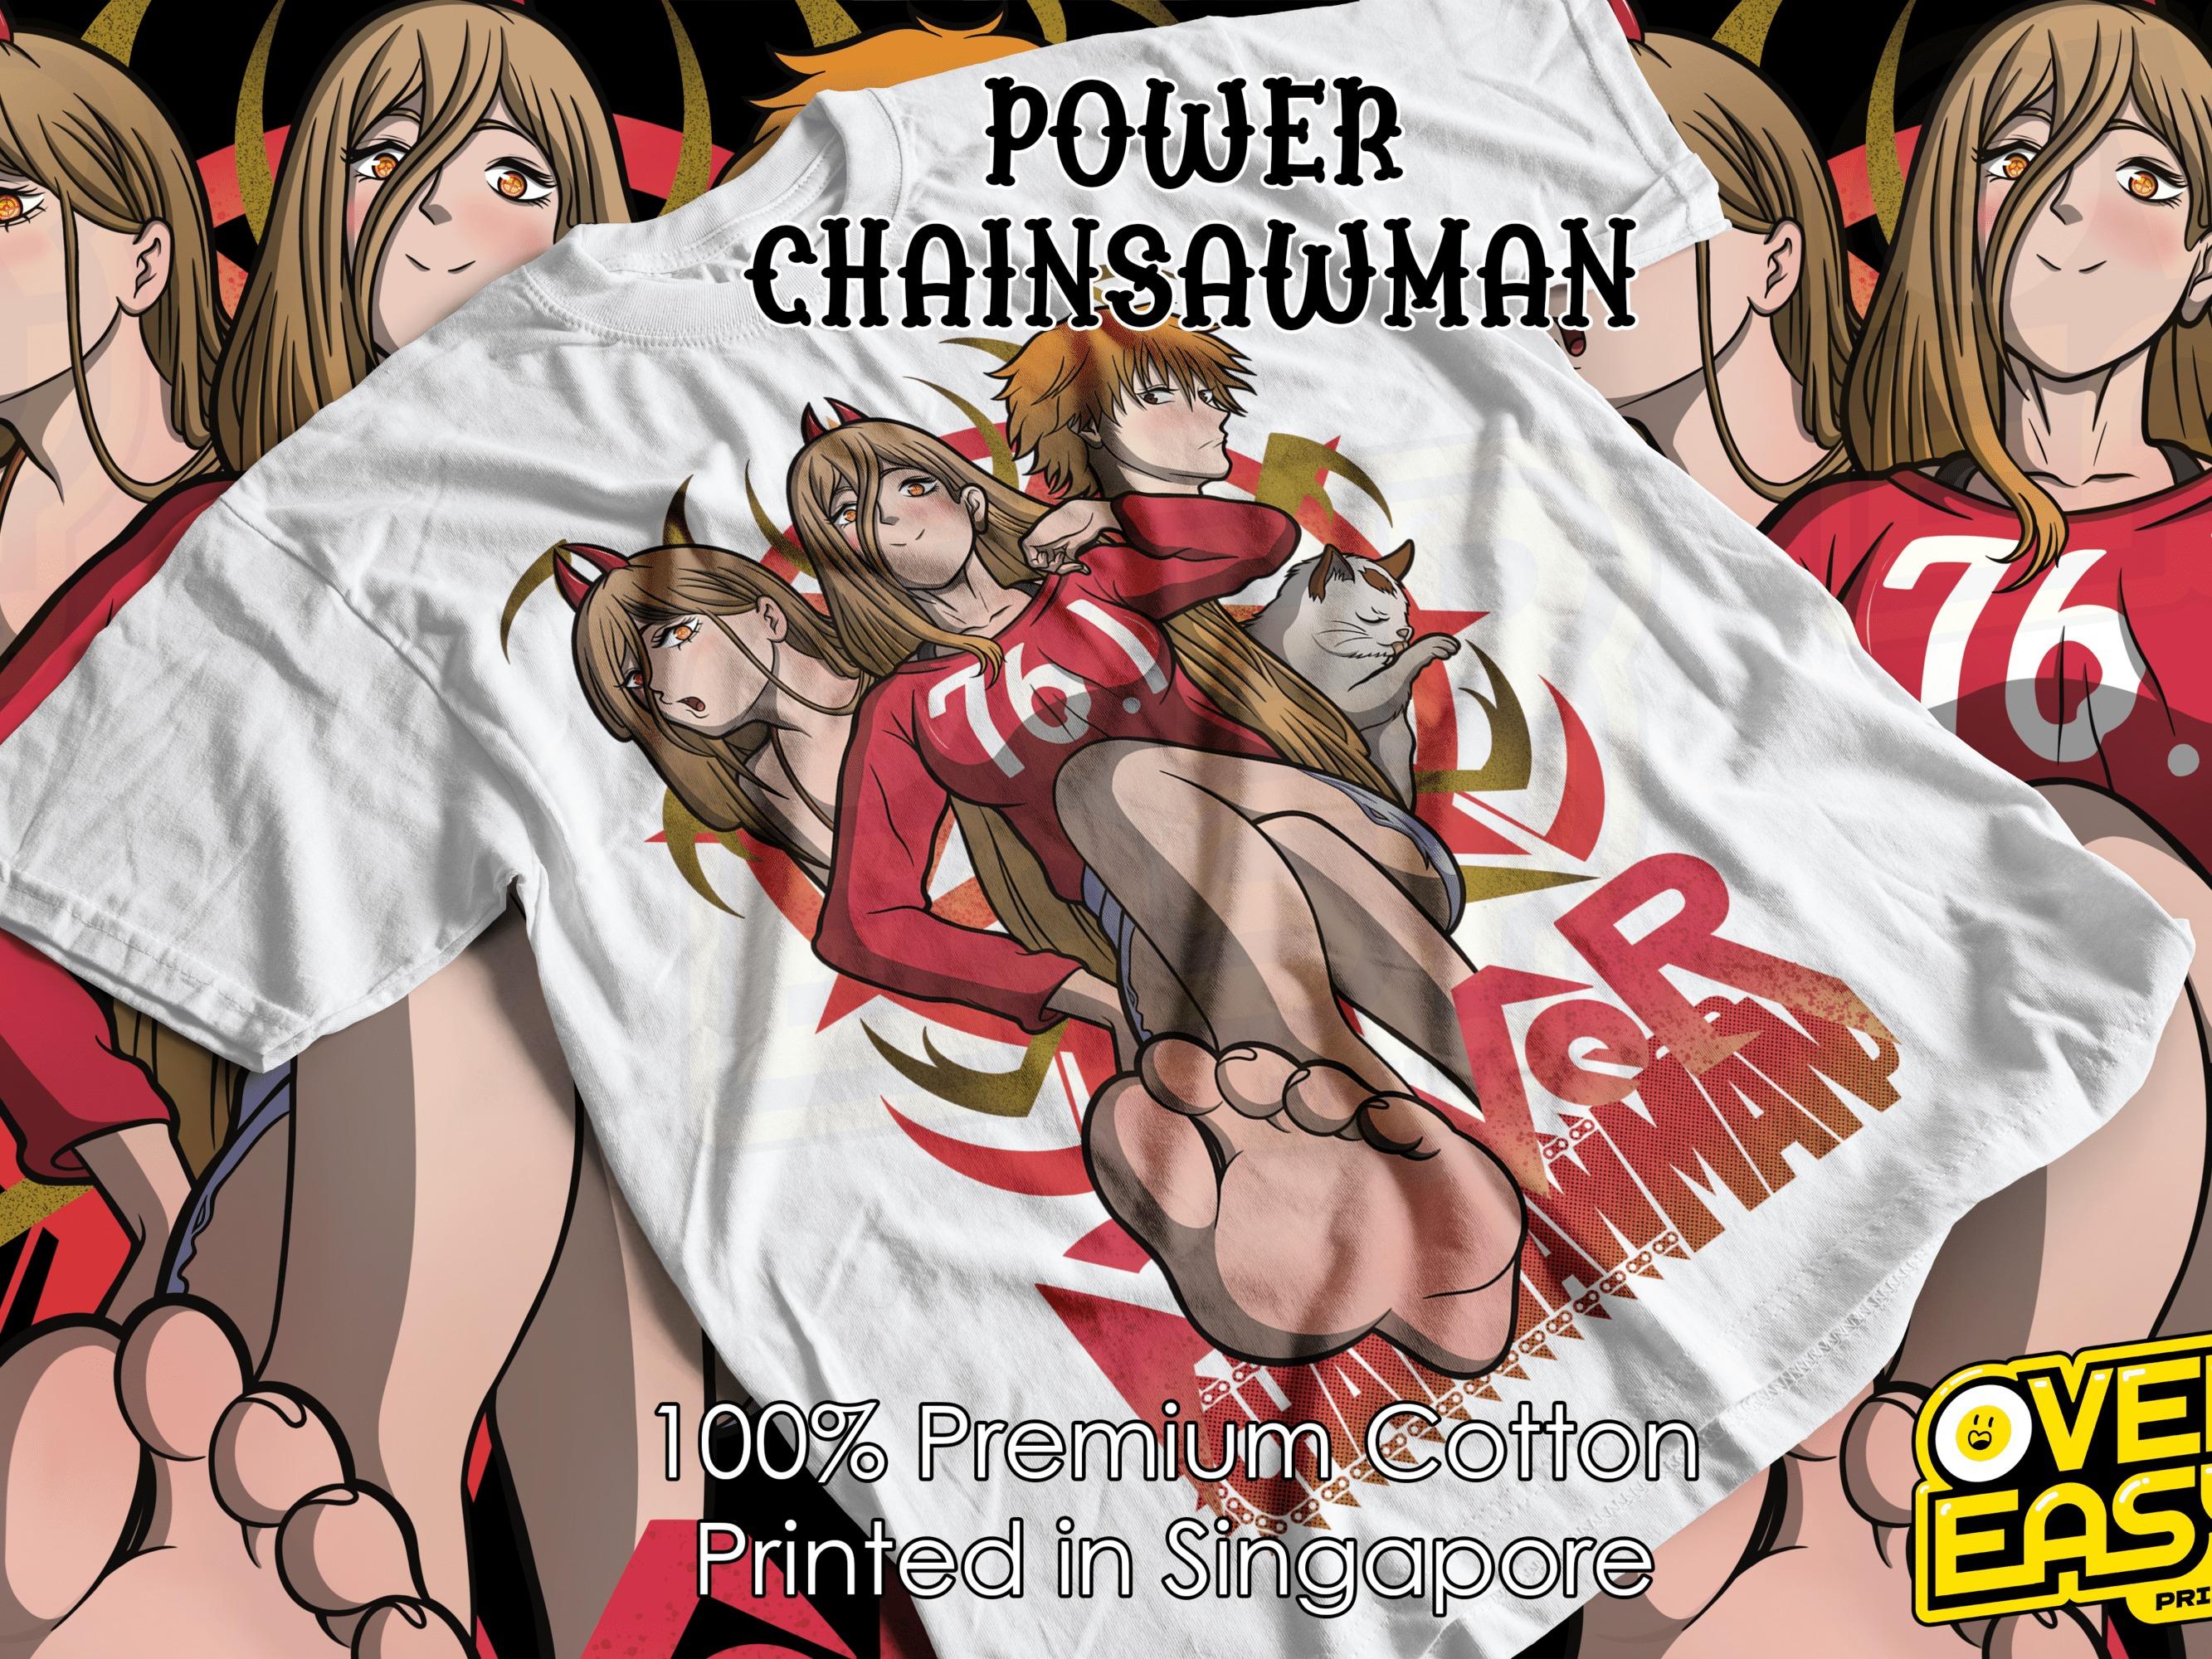 Power Chainsaw Man Inspired FANART Anime T-Shirt